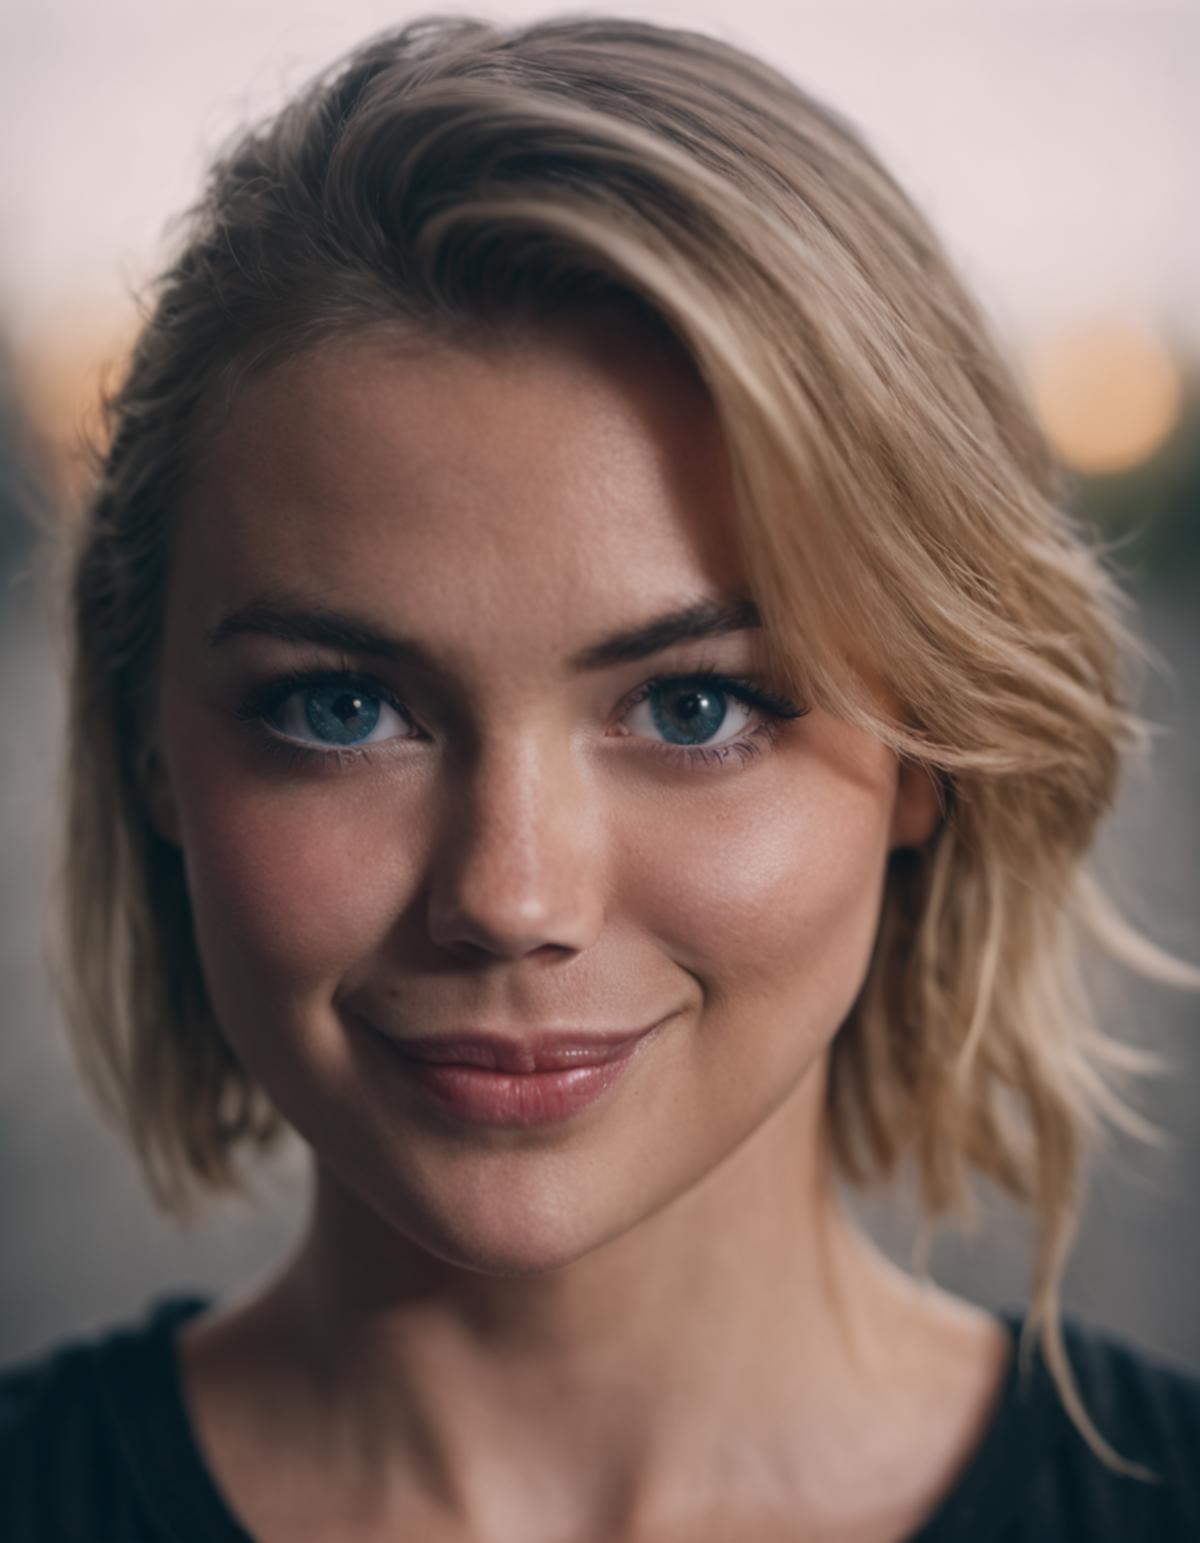 Kate Upton's face SDXL image by dolirama126